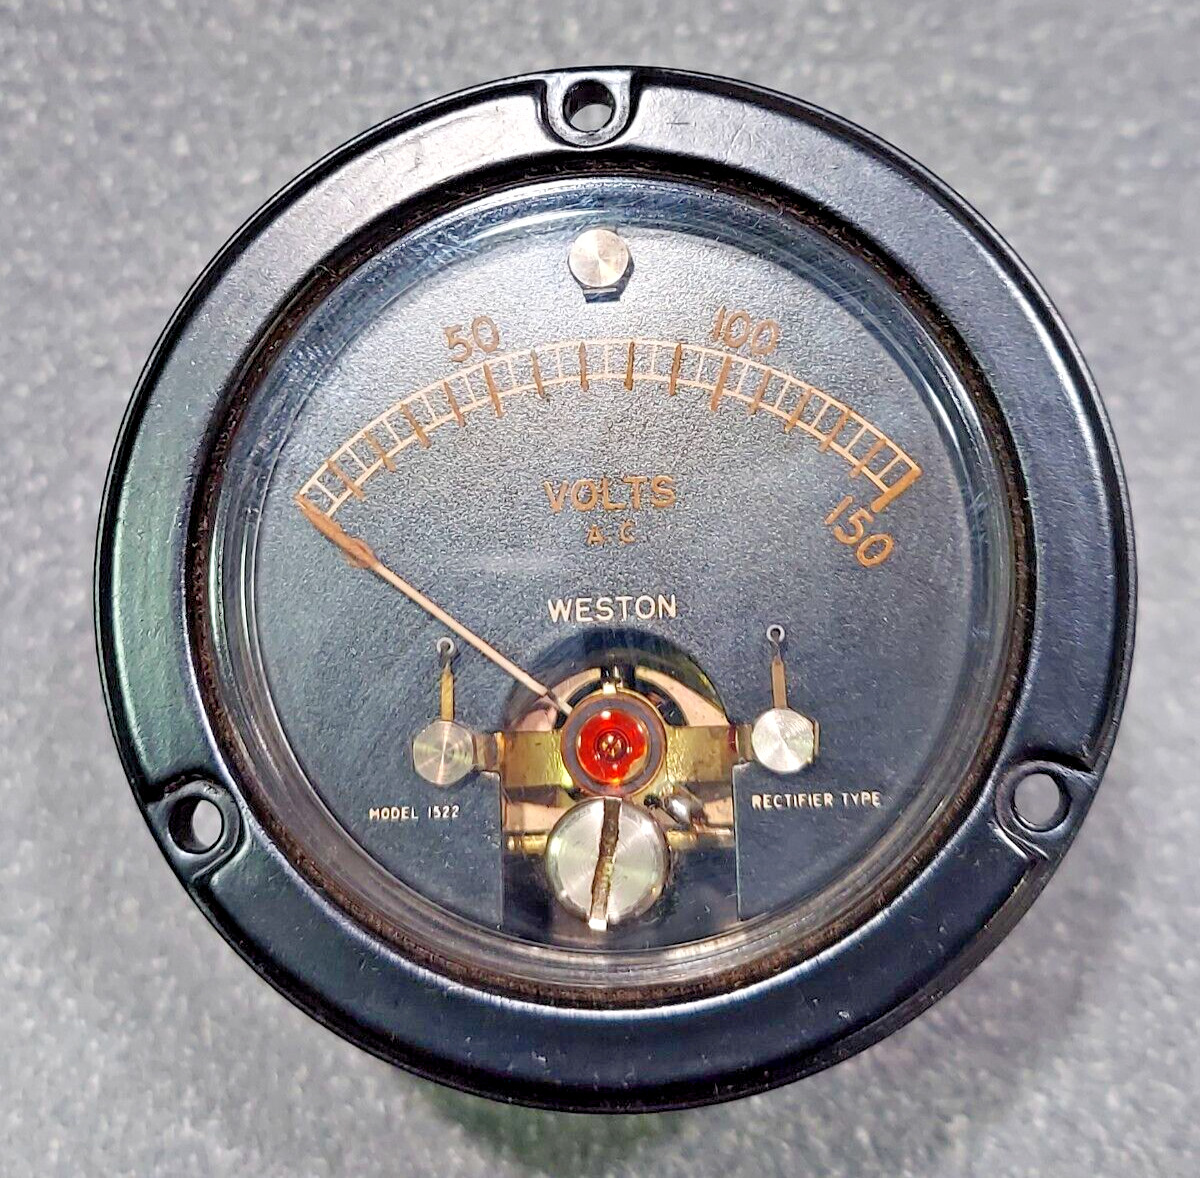 Weston Electrical Meter Model 1522   0-150 volts AC   Vintage 1954